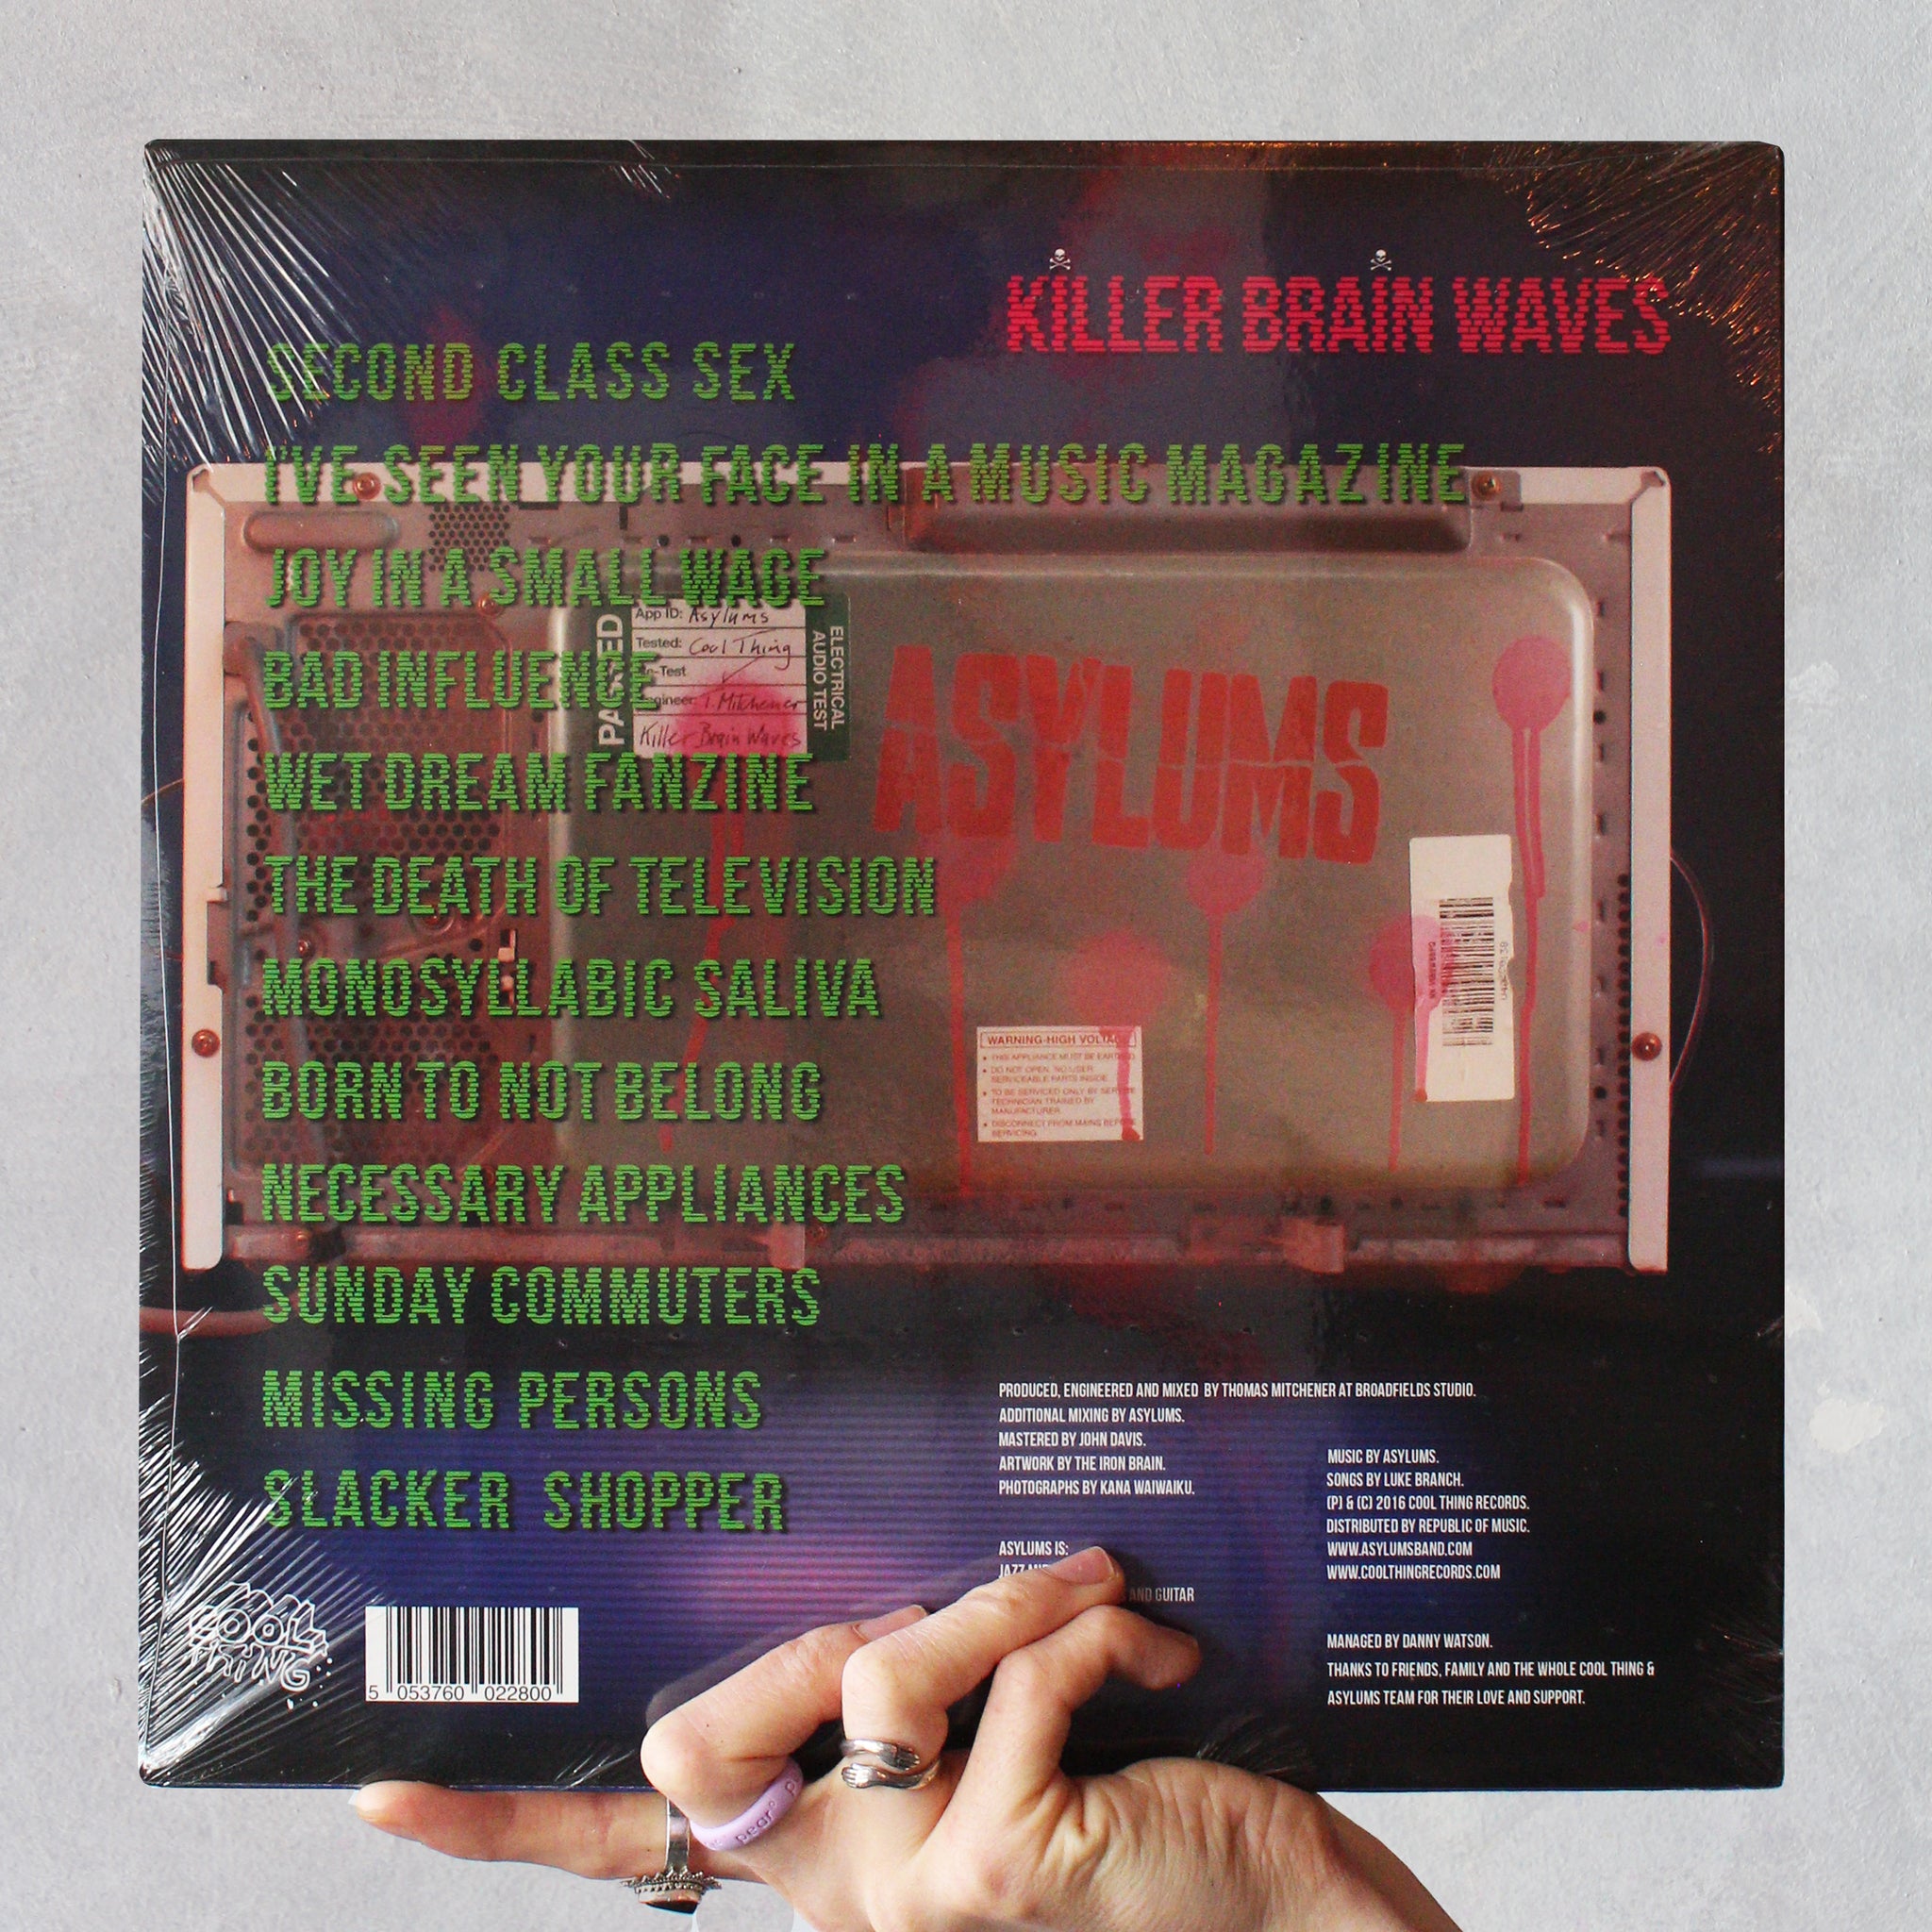 Asylums - 'Killer Brain Waves' (2016) Exclusive Pink Edge Glow Vinyl - Audio Architect Apparel